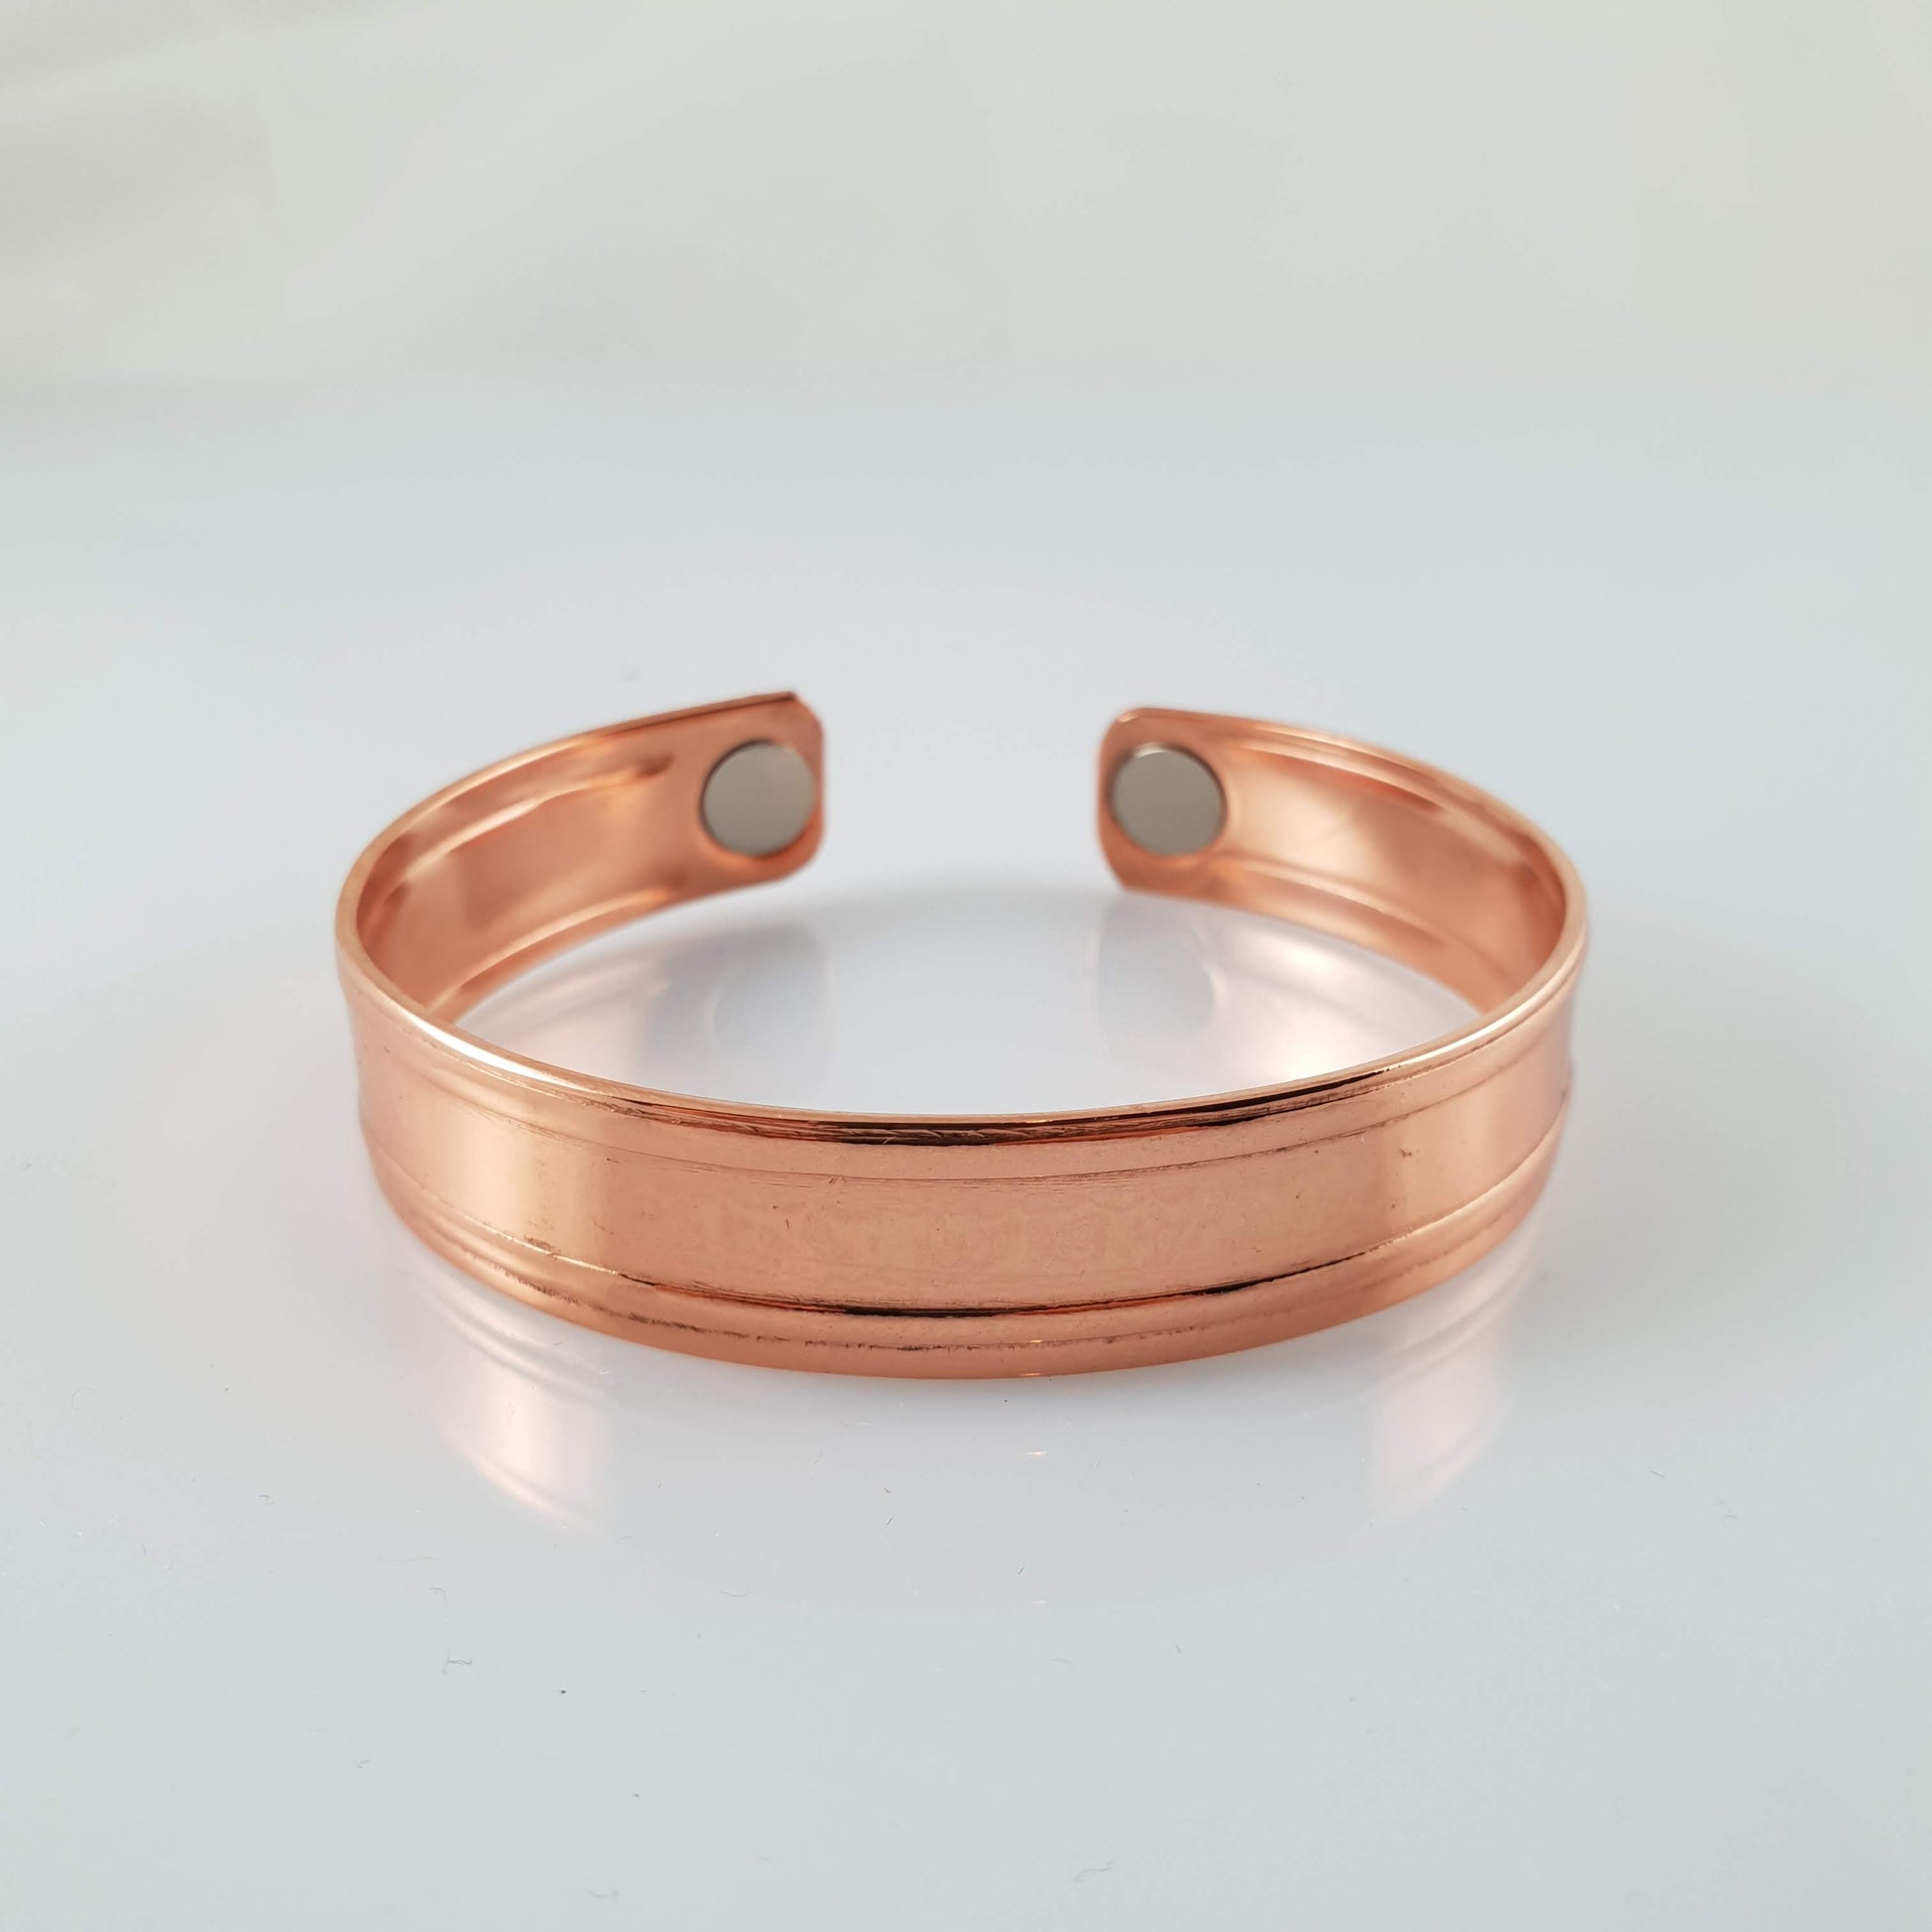 Handmade NZ Pure Copper Bracelet with Stripe - Rivendell Shop